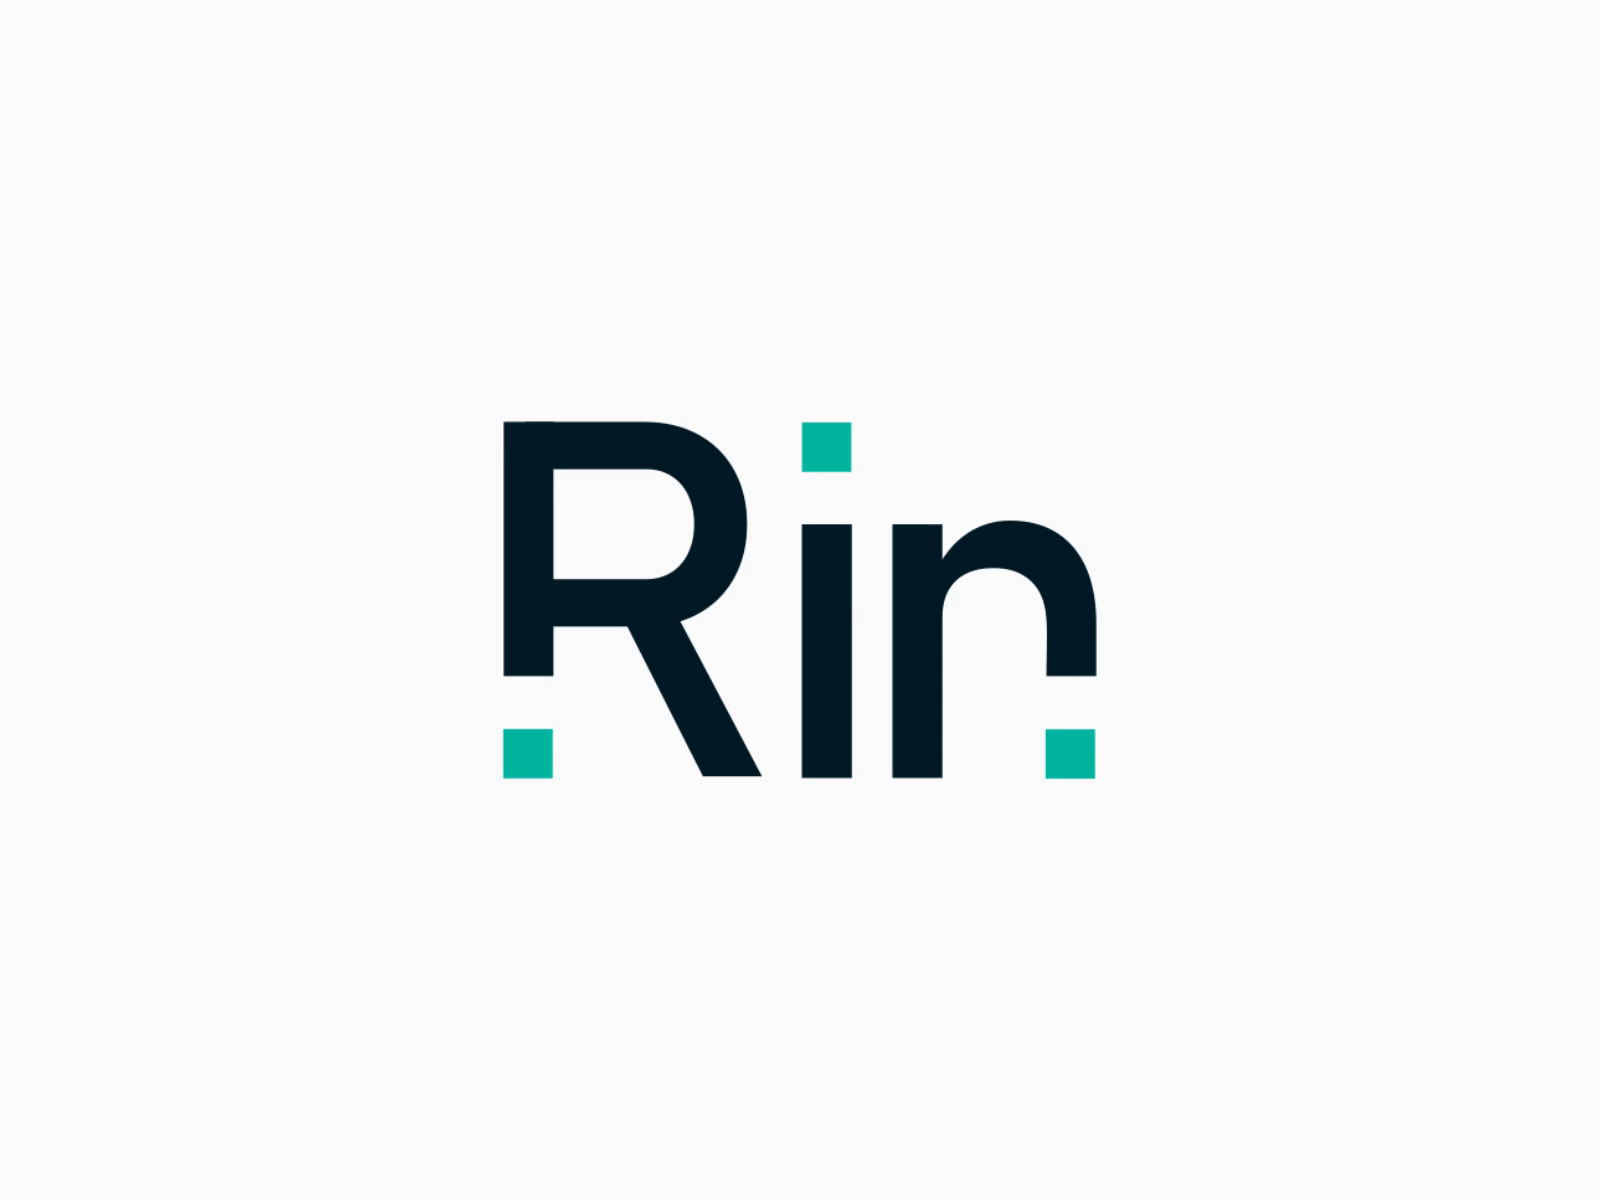 rin-logo-animation-by-hamza-ouaziz-for-fellas-on-dribbble